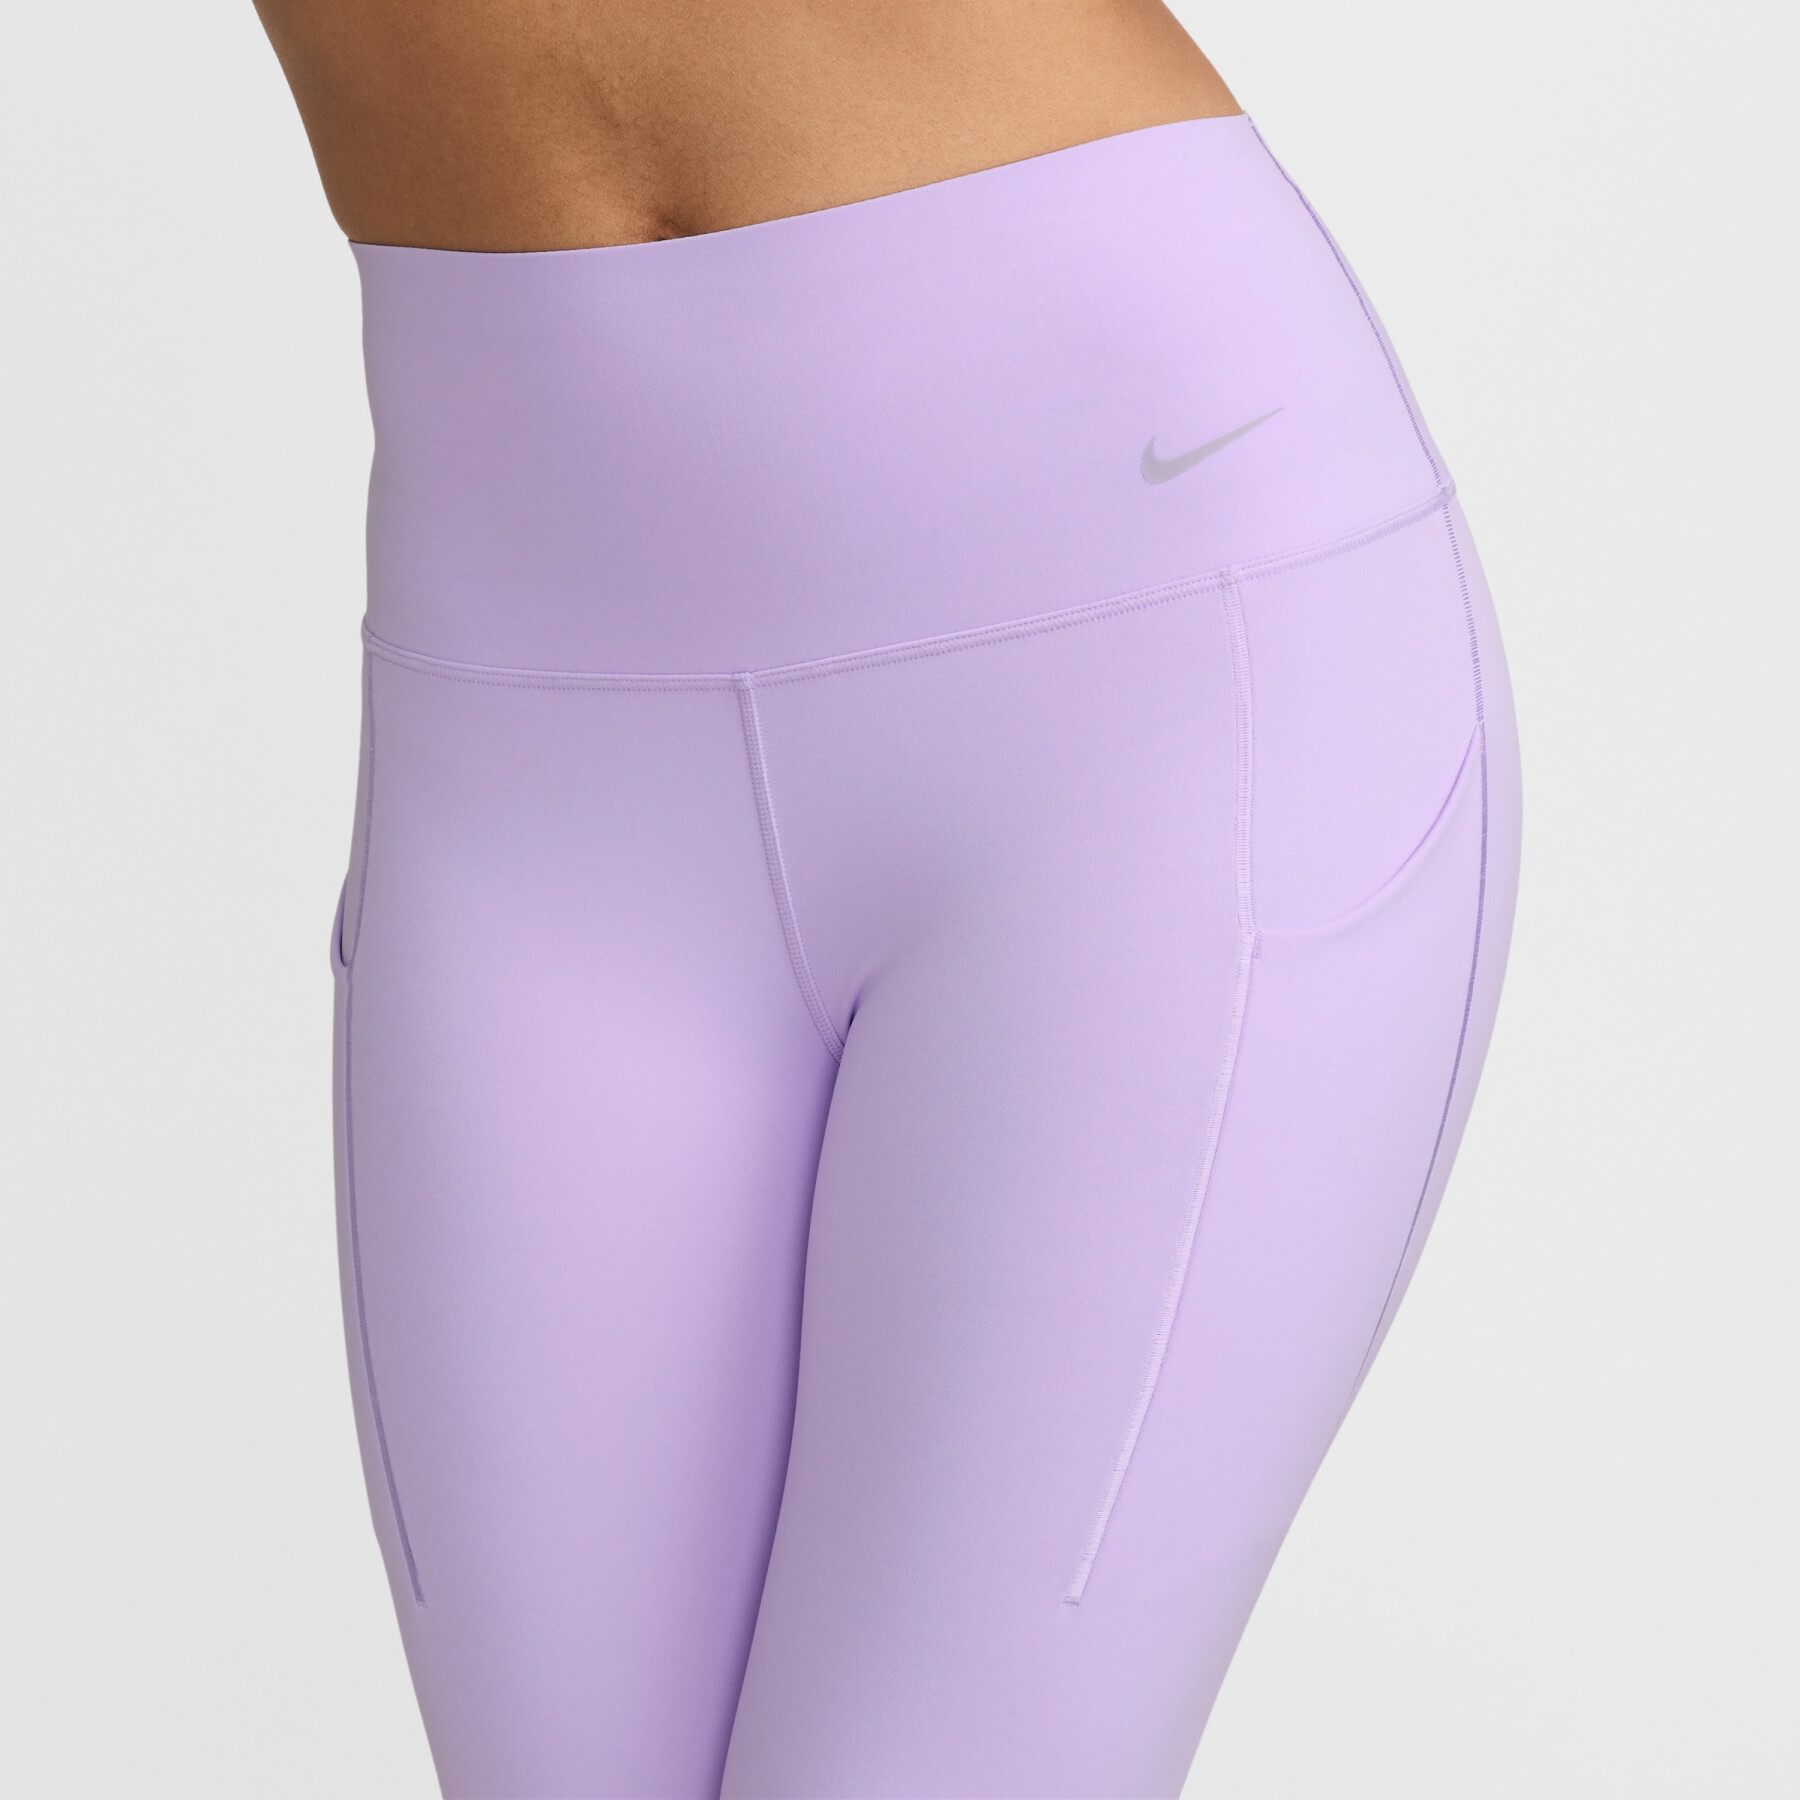 Women's 7/8 leggings Nike Universa